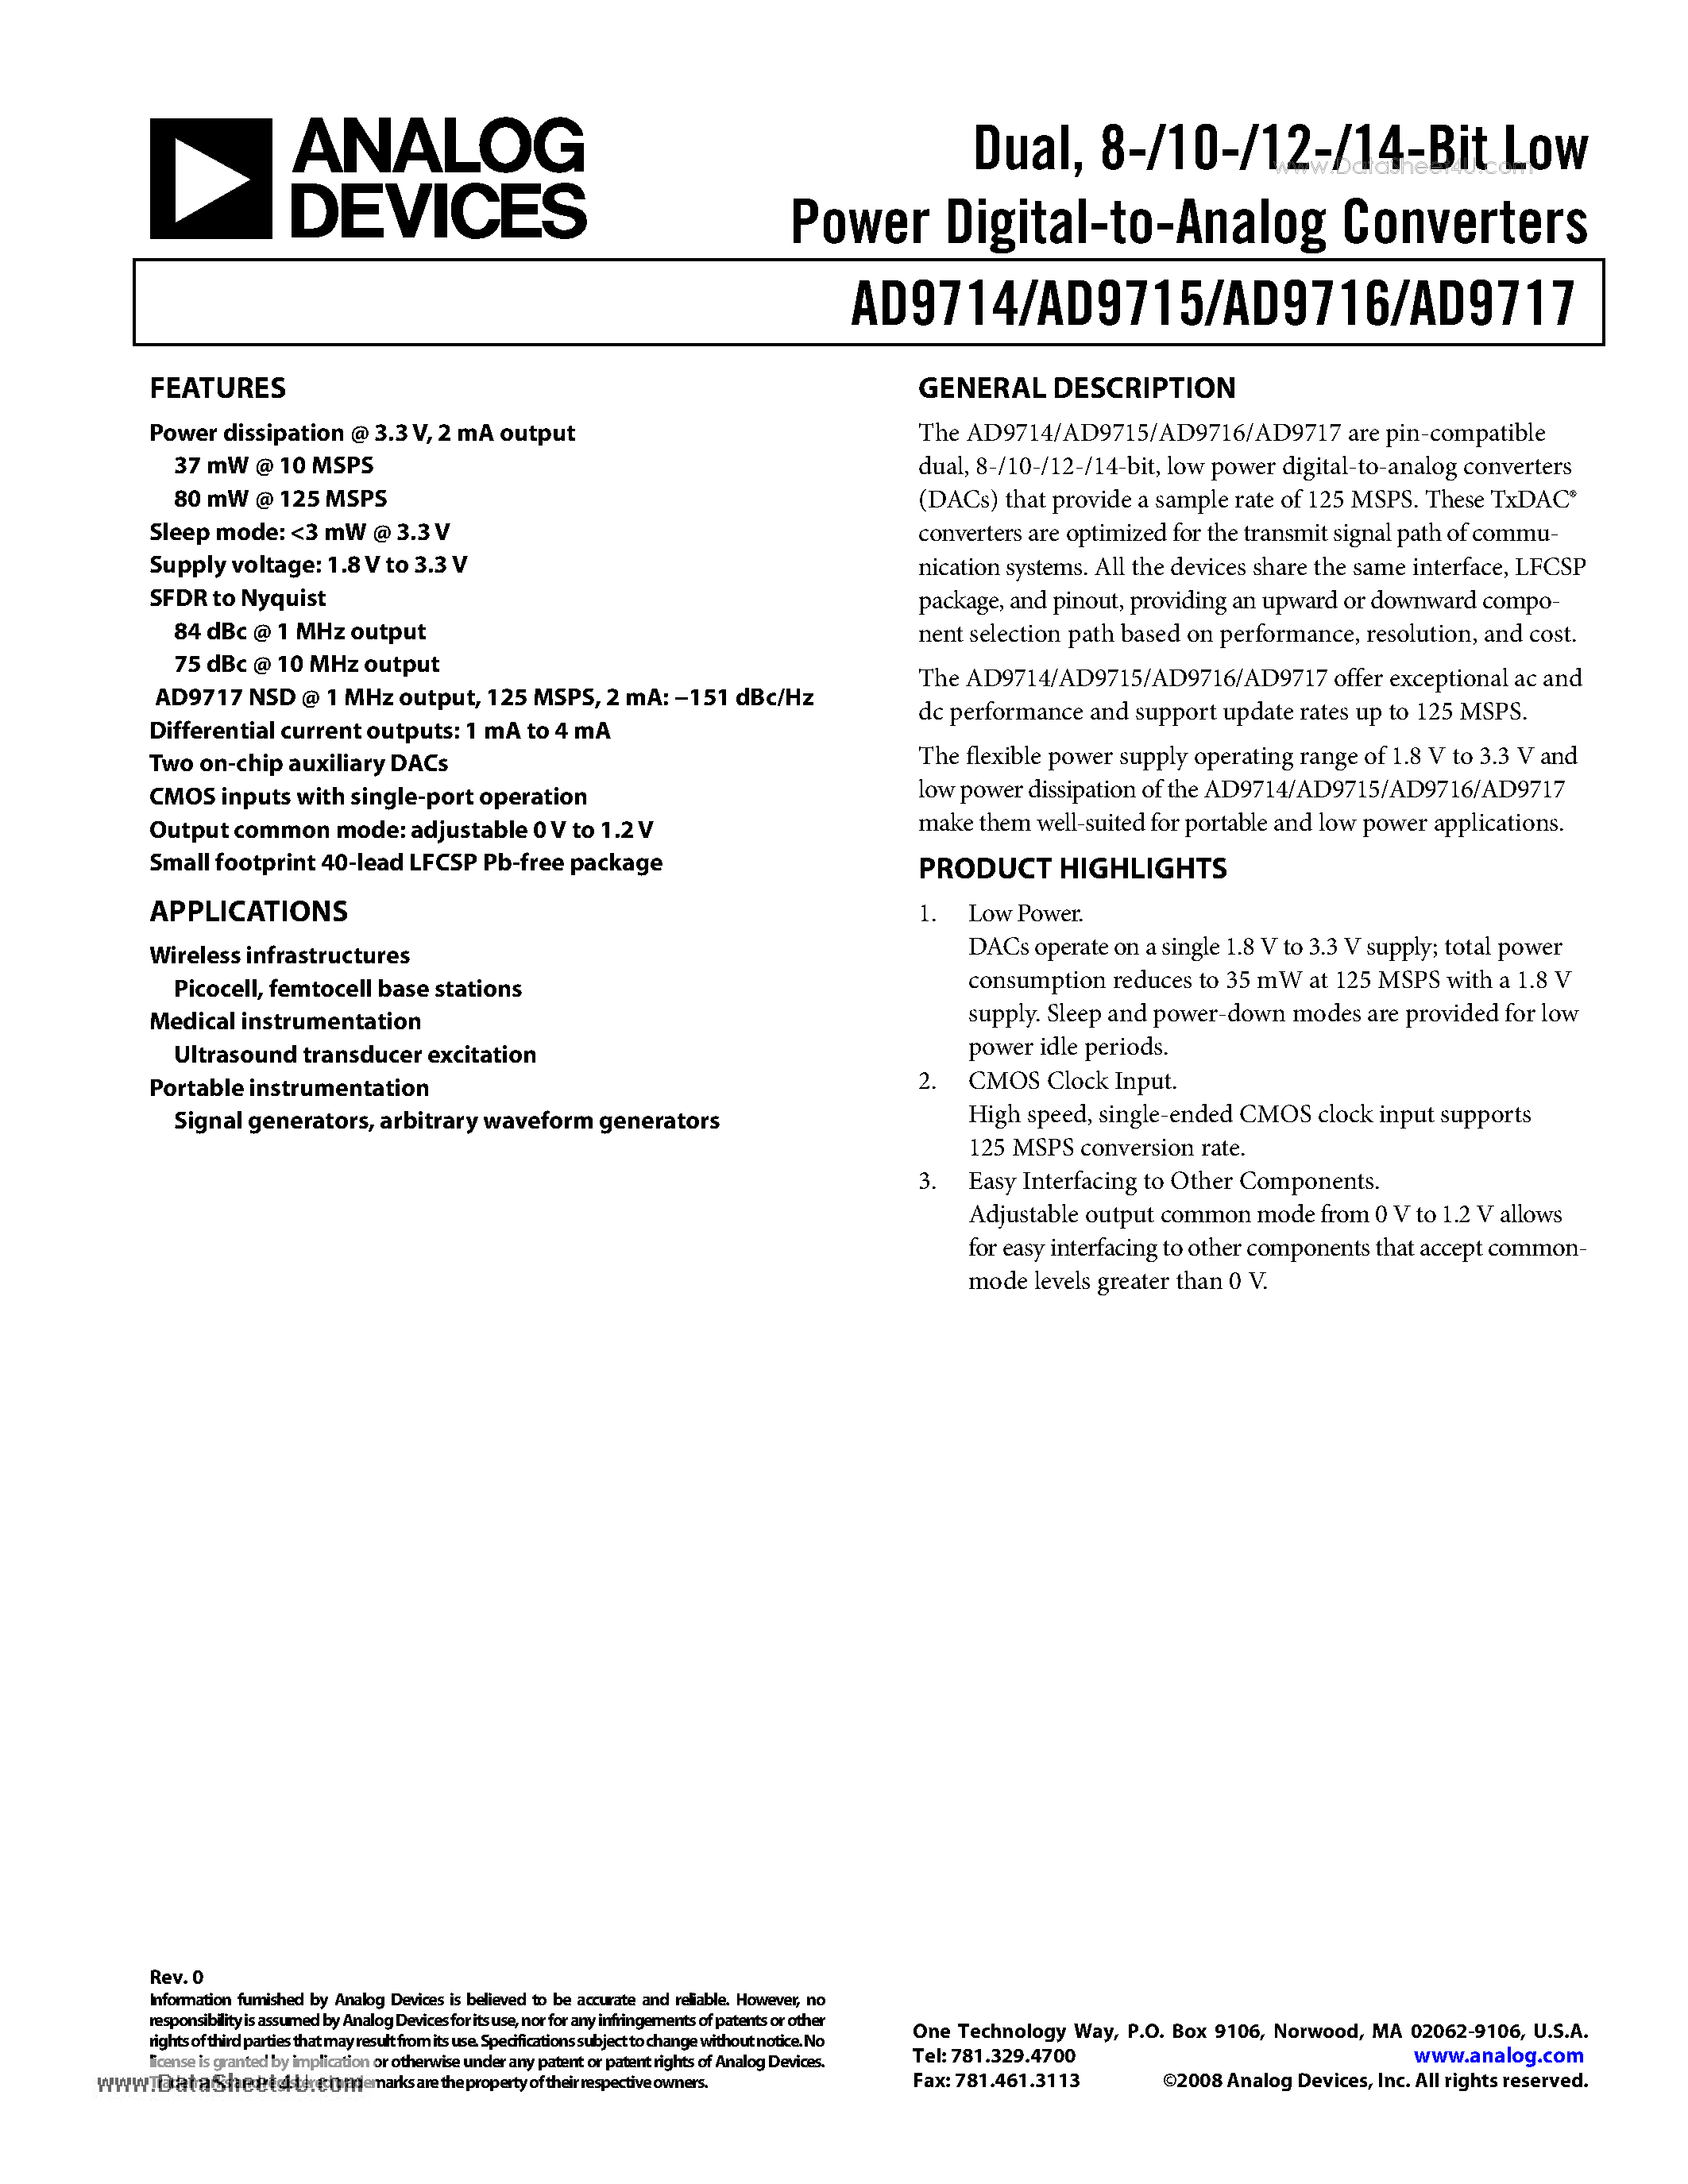 Даташит AD9714 - (AD9714 - AD9717) 8-/10-/12-/14-Bit Low Power Digital-to-Analog Converters страница 1